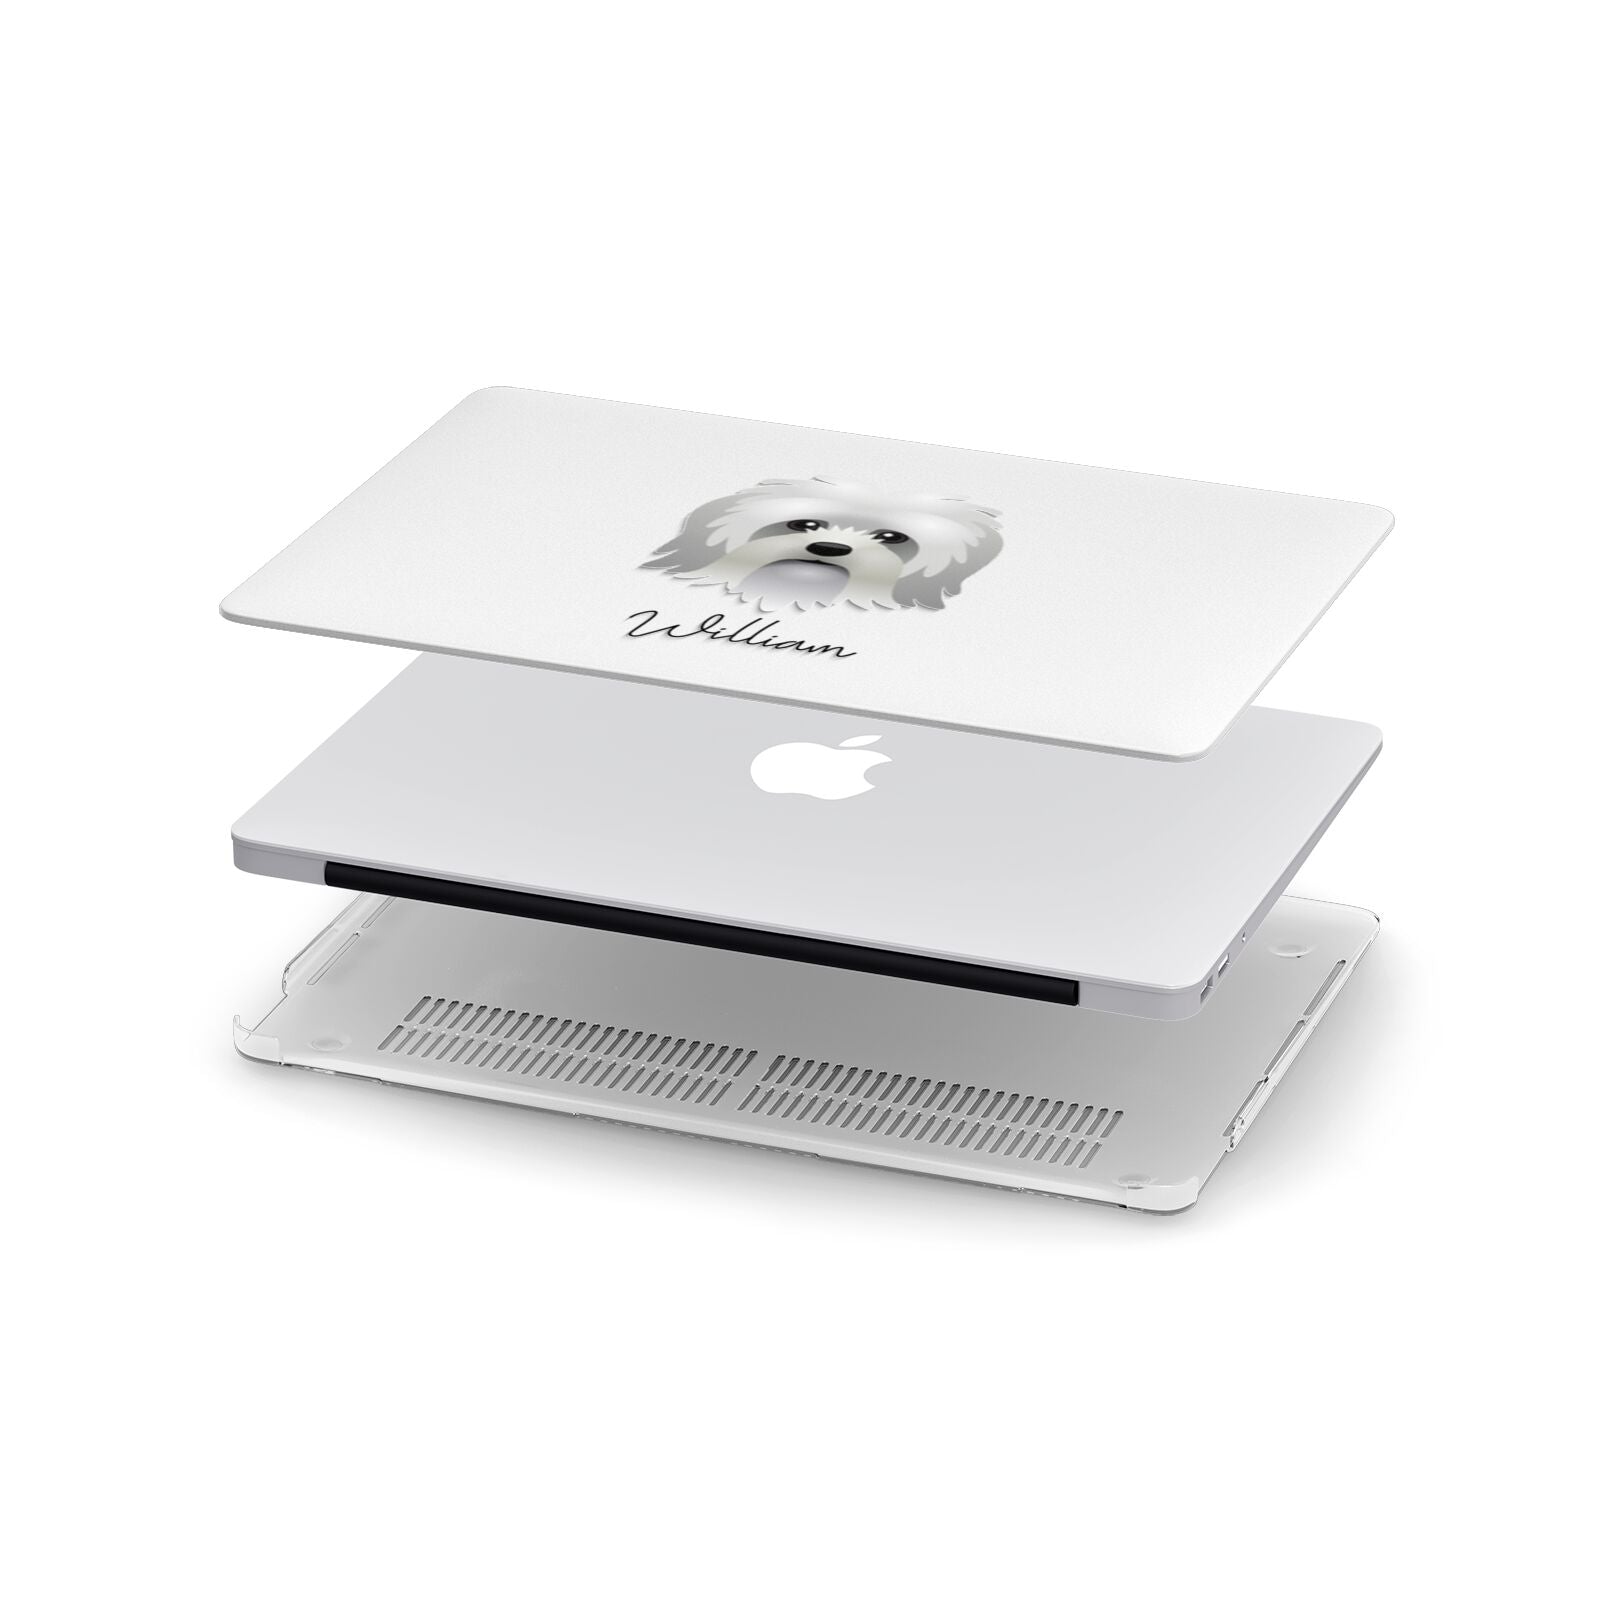 Lo wchen Personalised Apple MacBook Case in Detail